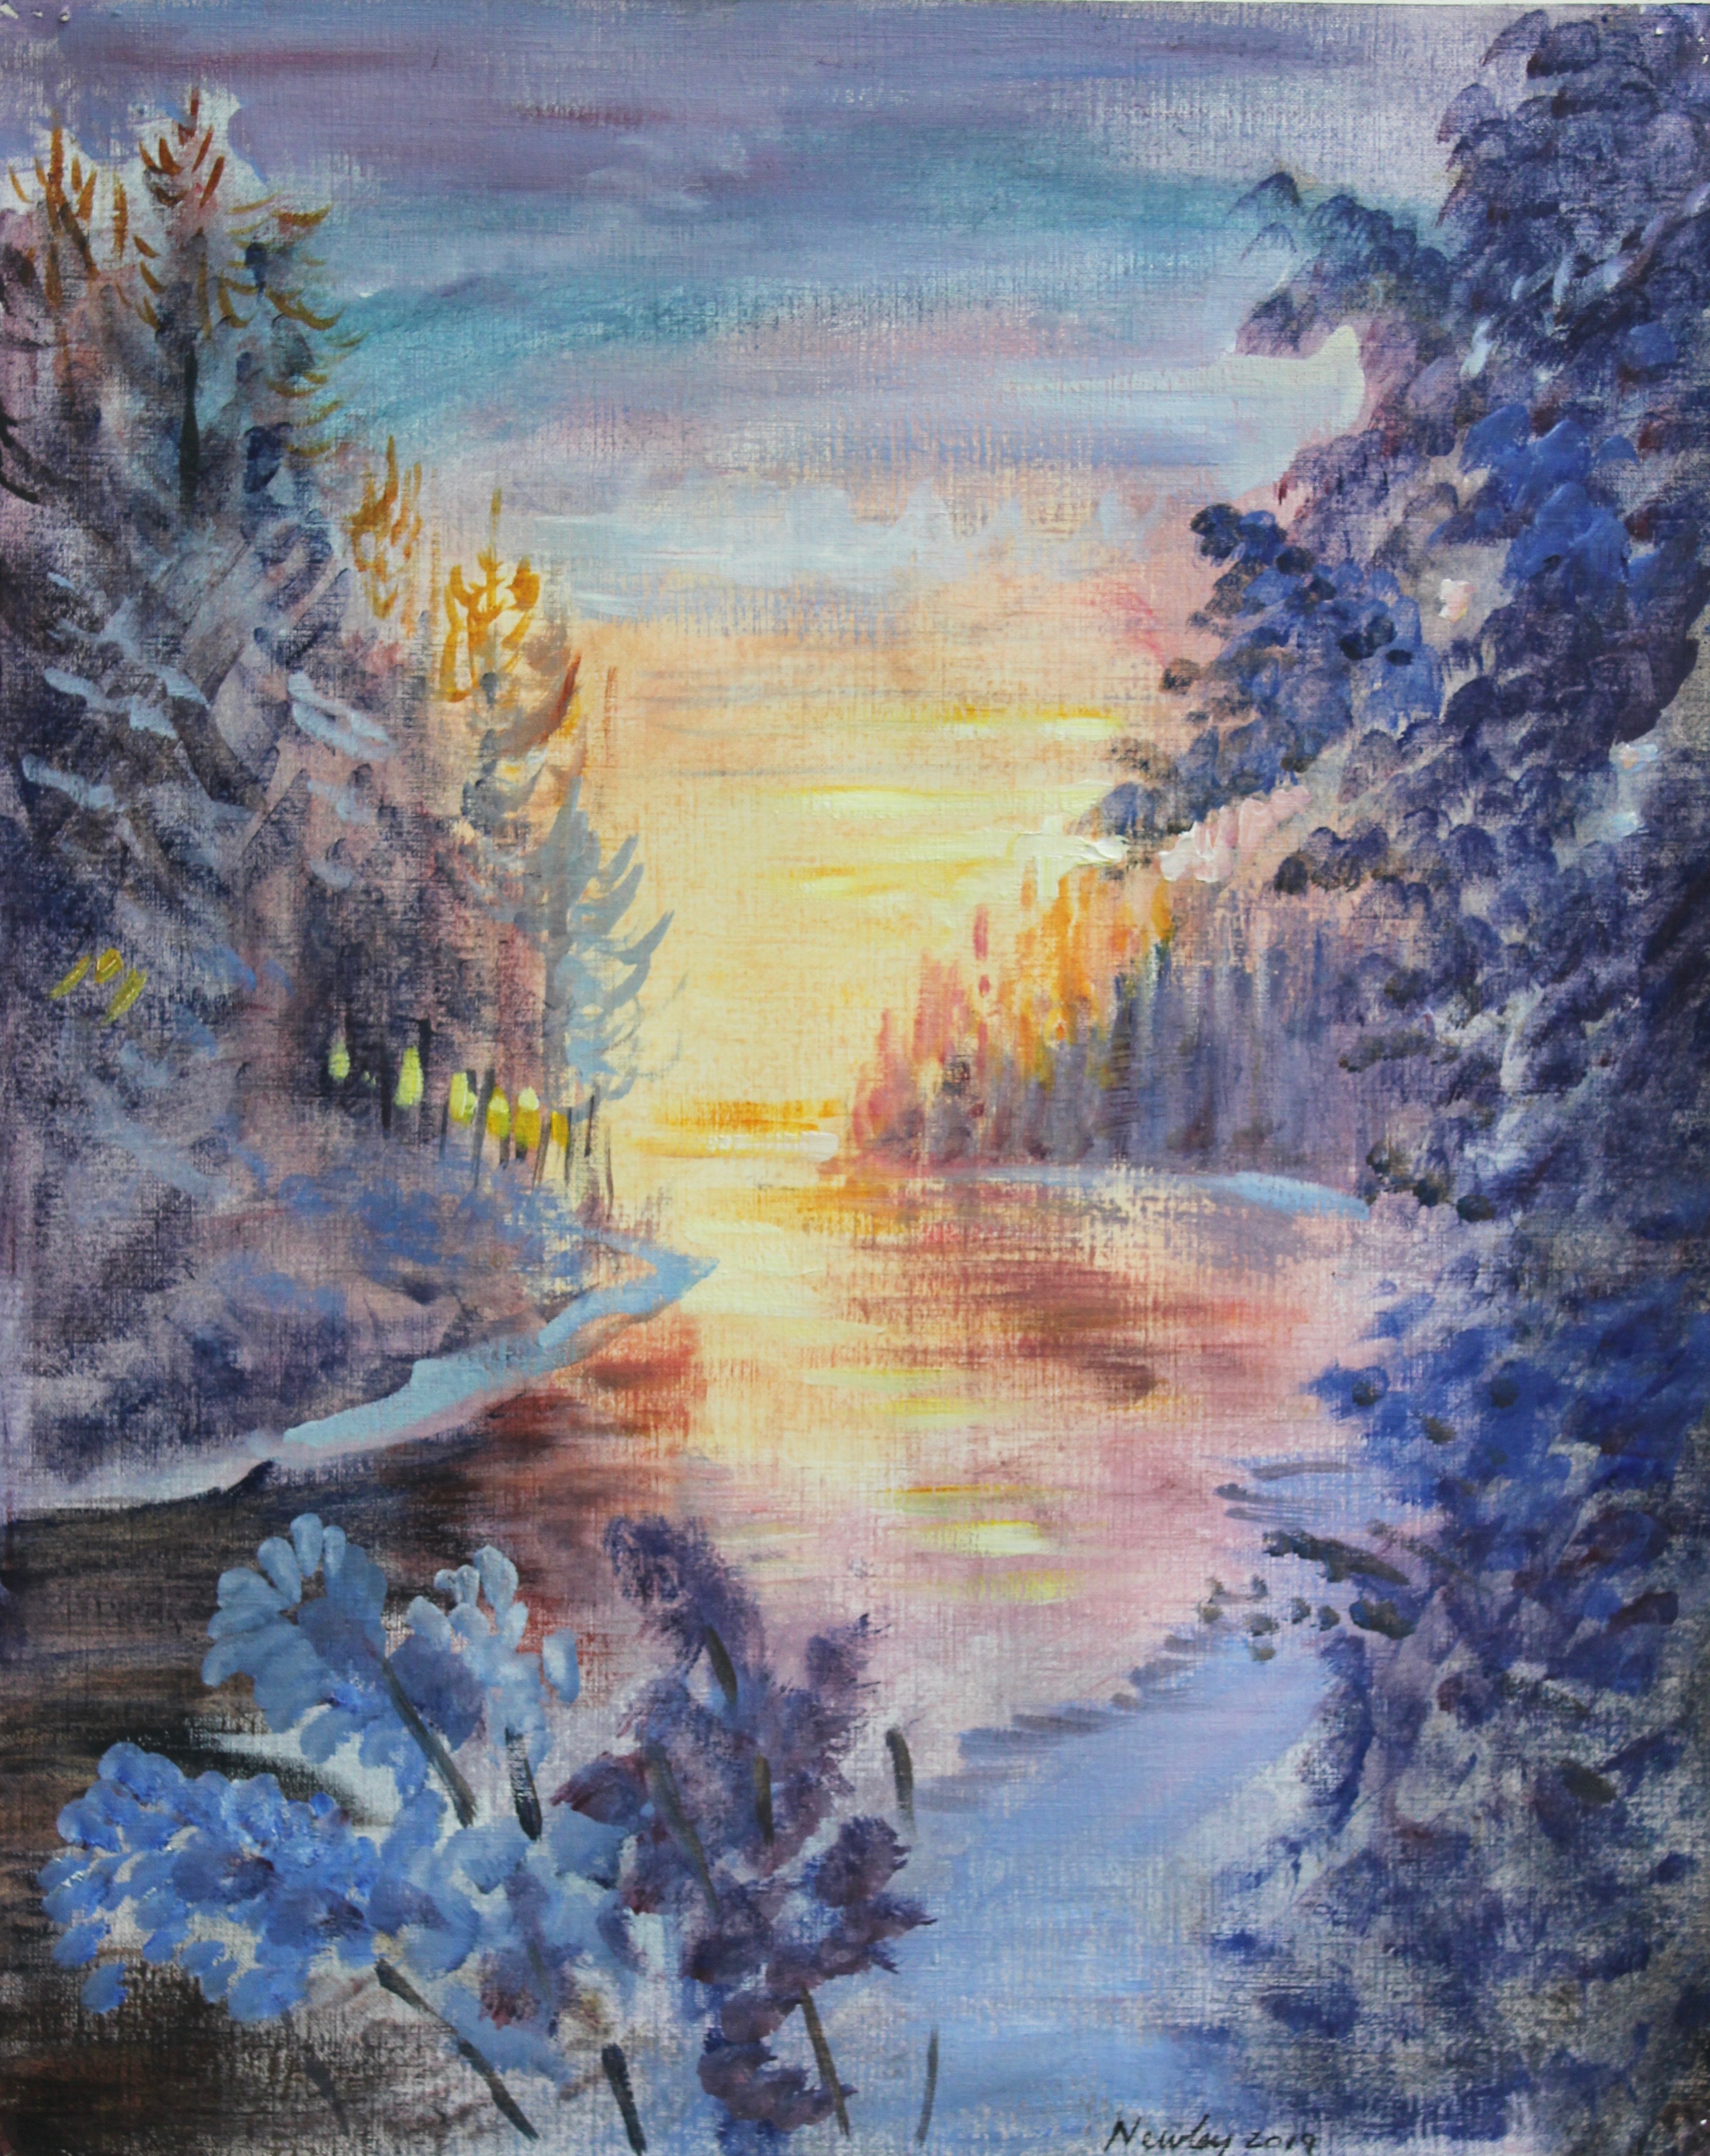 River Study, Winter, (2019)